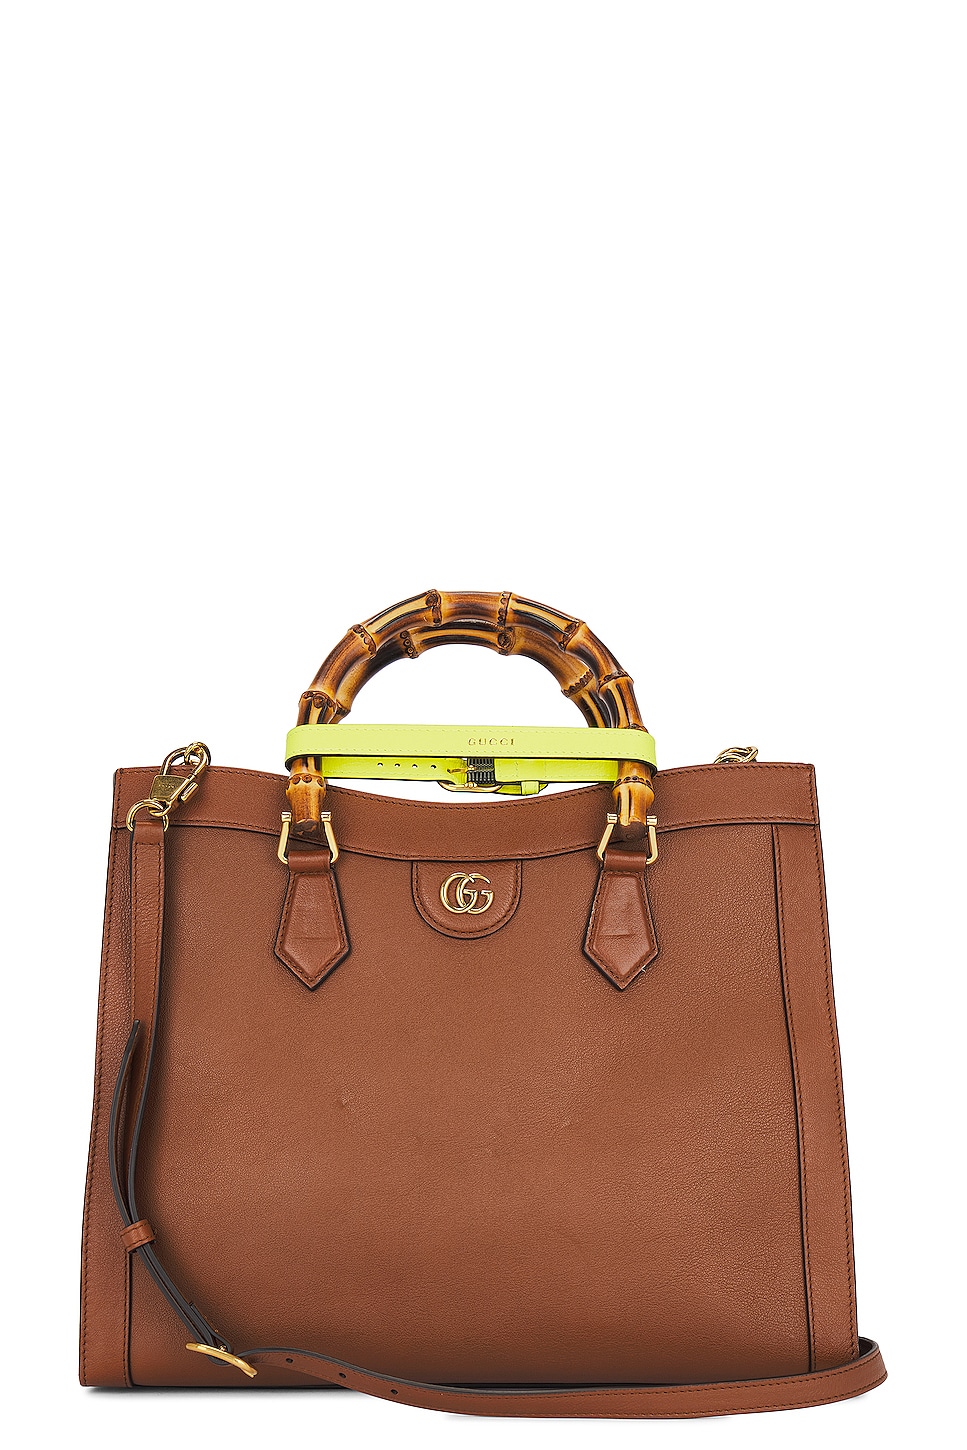 Diana Bamboo Leather Handbag in Brown